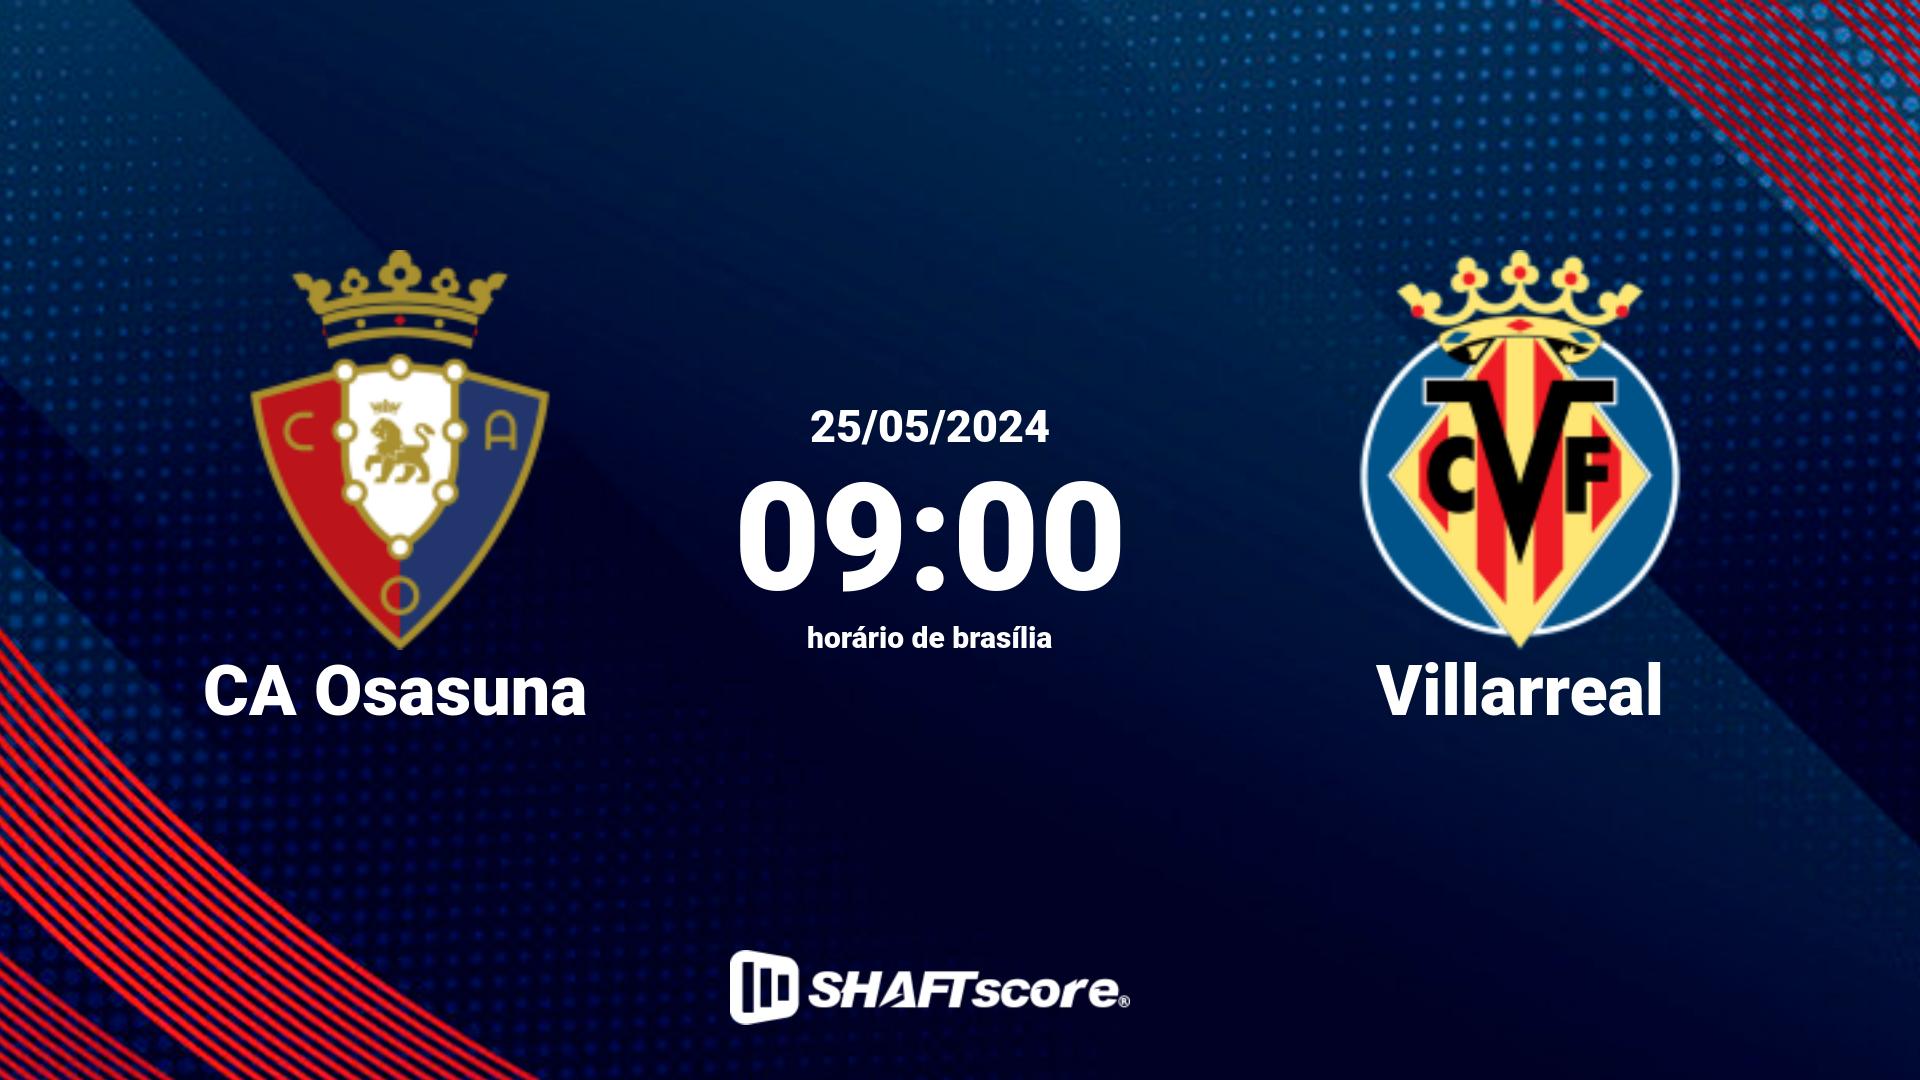 Estatísticas do jogo CA Osasuna vs Villarreal 25.05 09:00